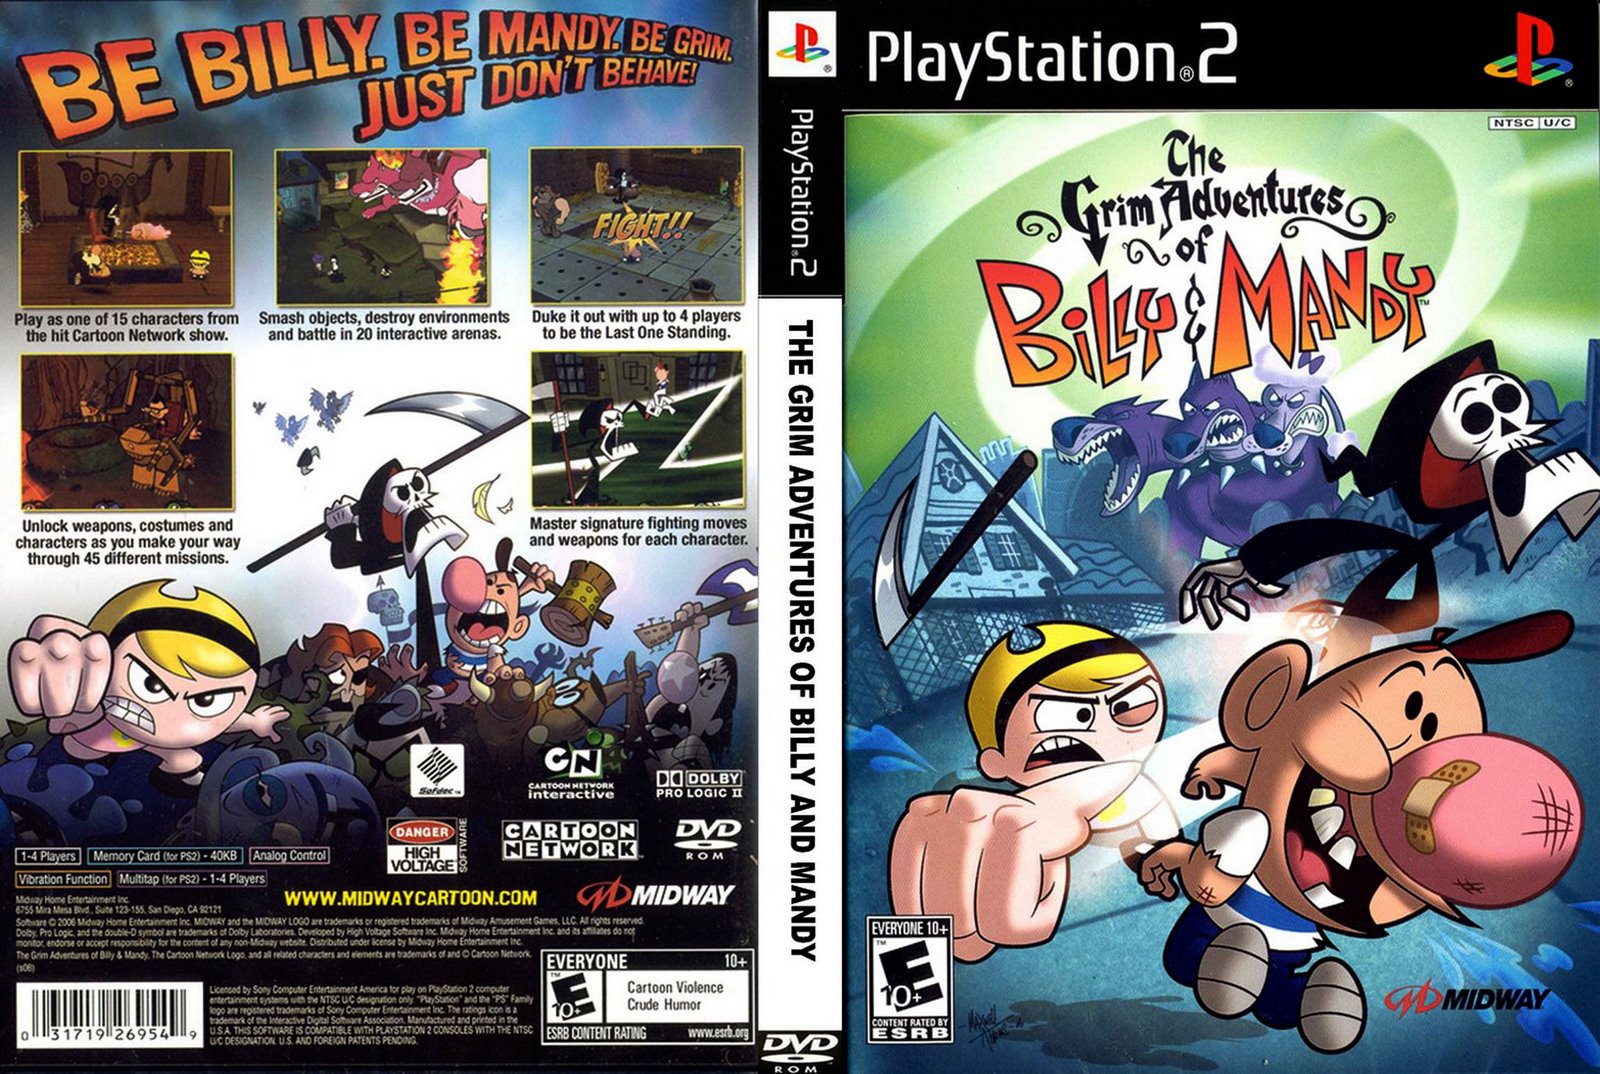 As terríveis Aventuras de Billy & Mandy - PS2 - Modo Versus #01